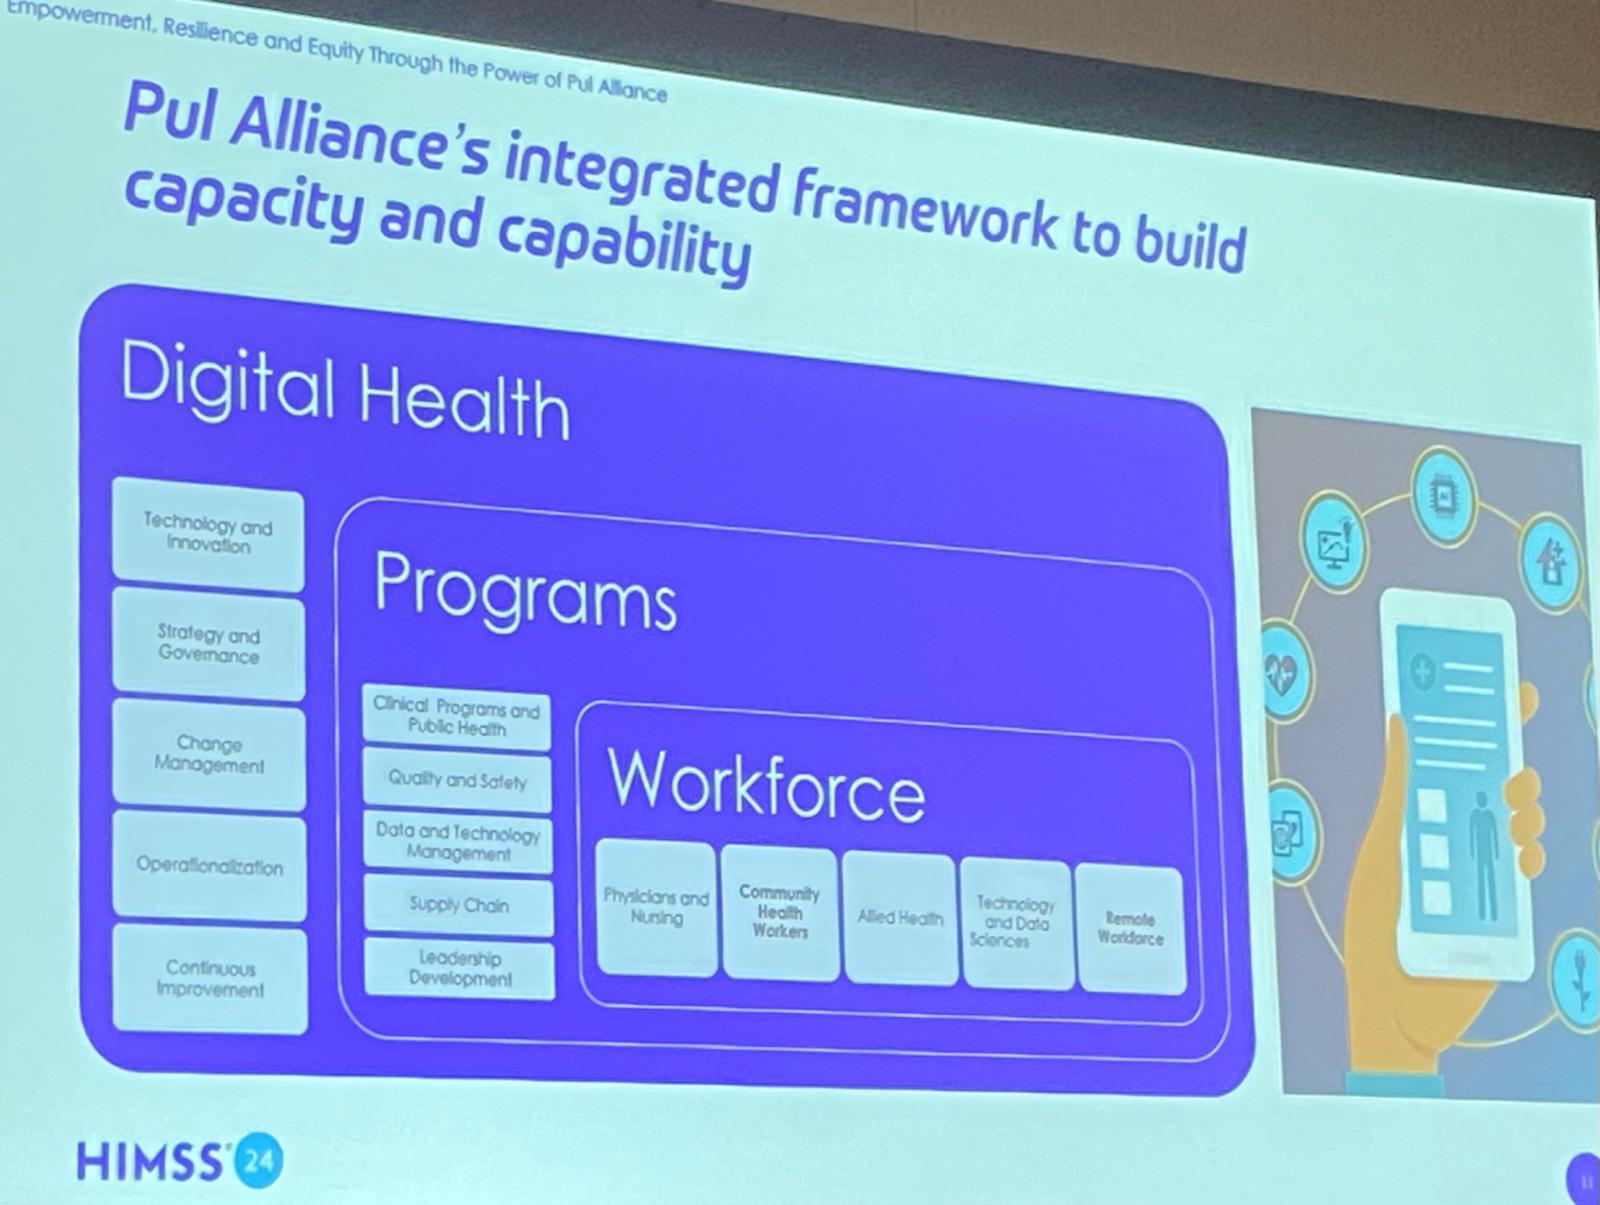 Pul Alliance DHE's integrated framework